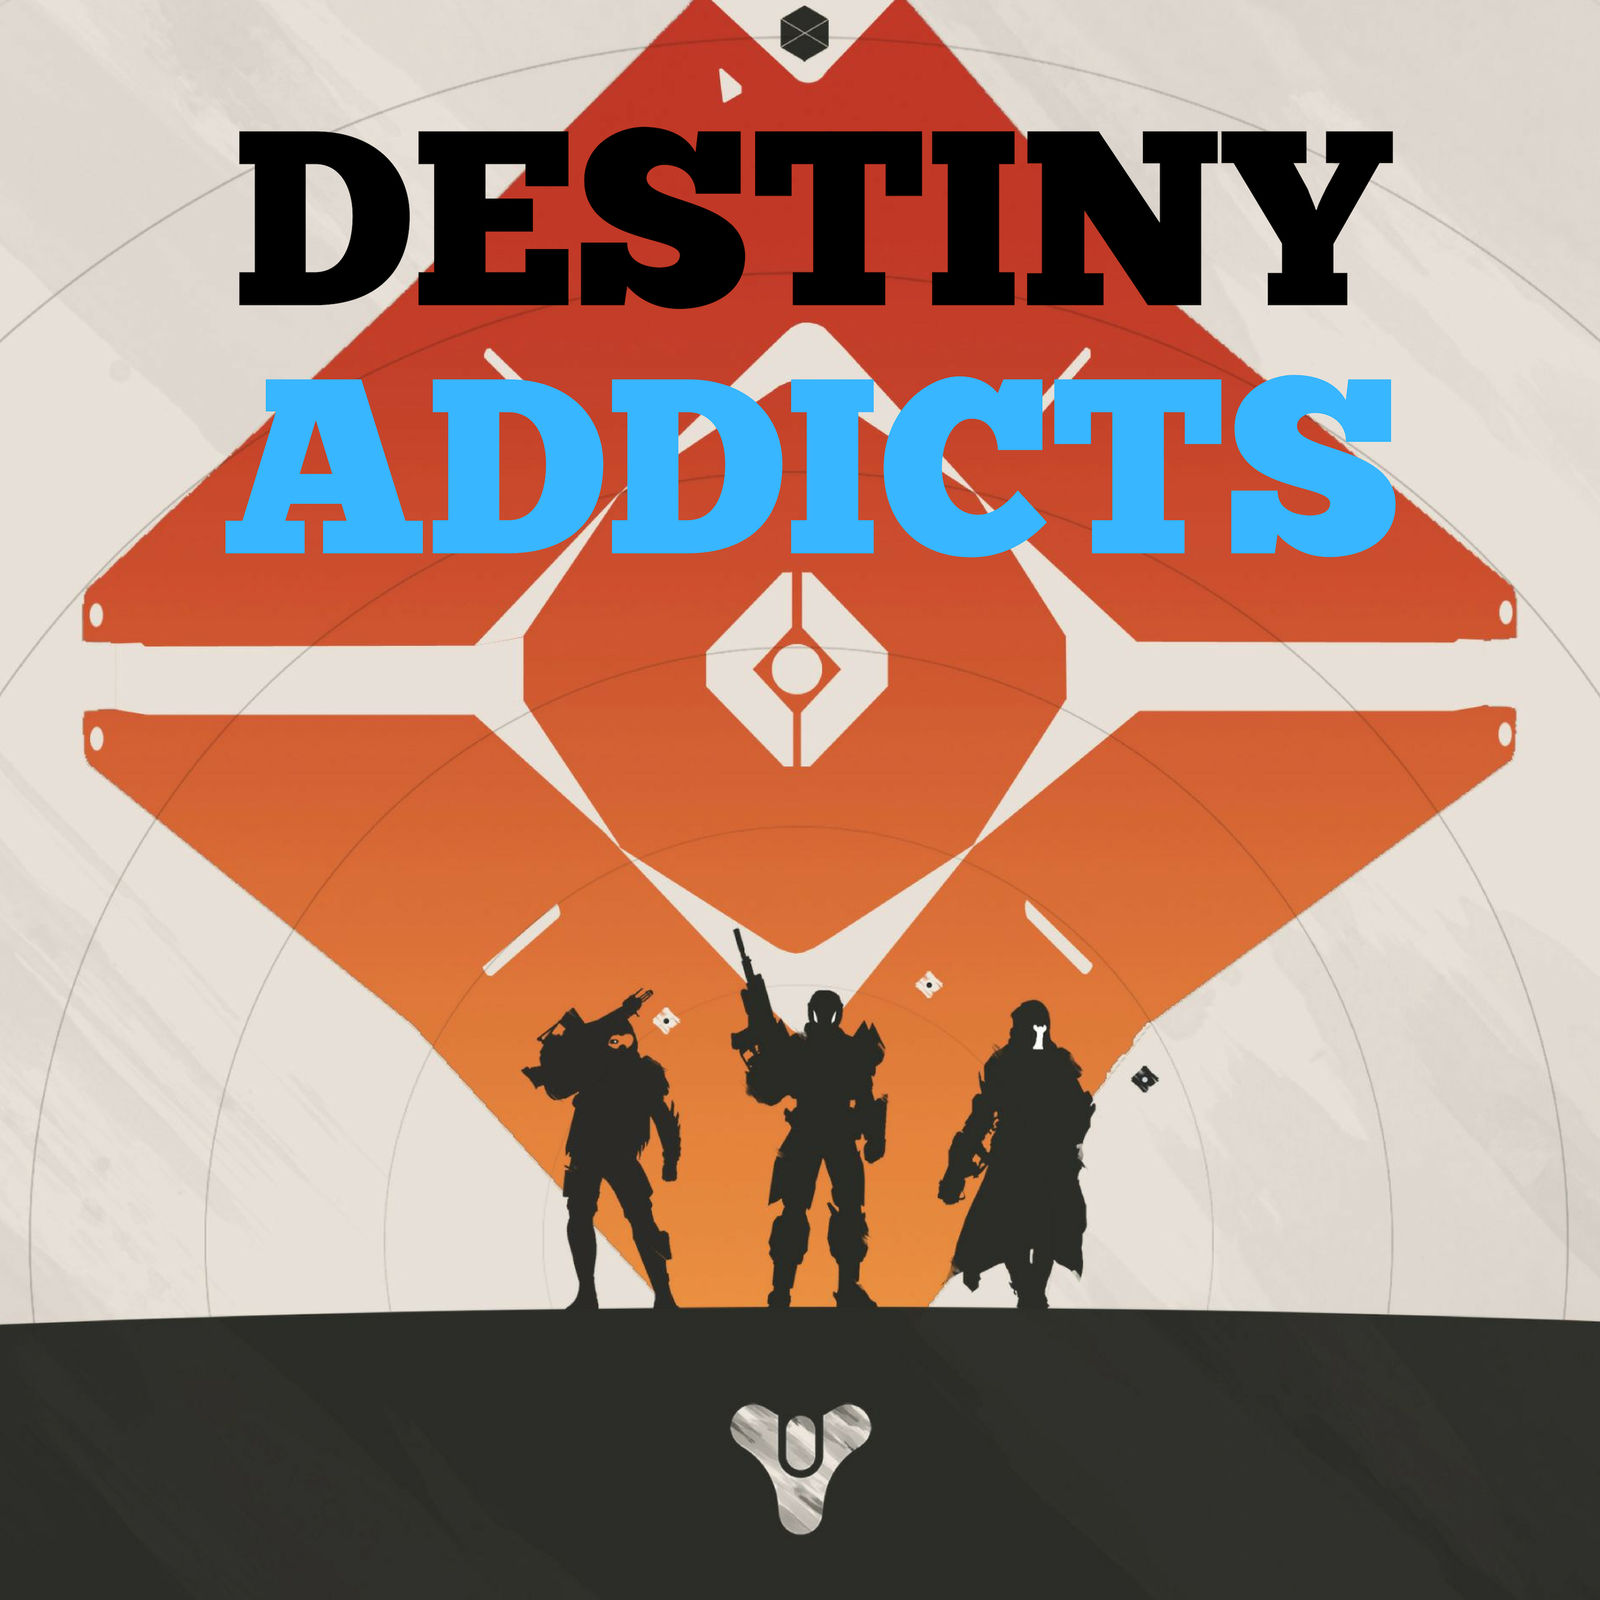 Destiny Addicts Podcast